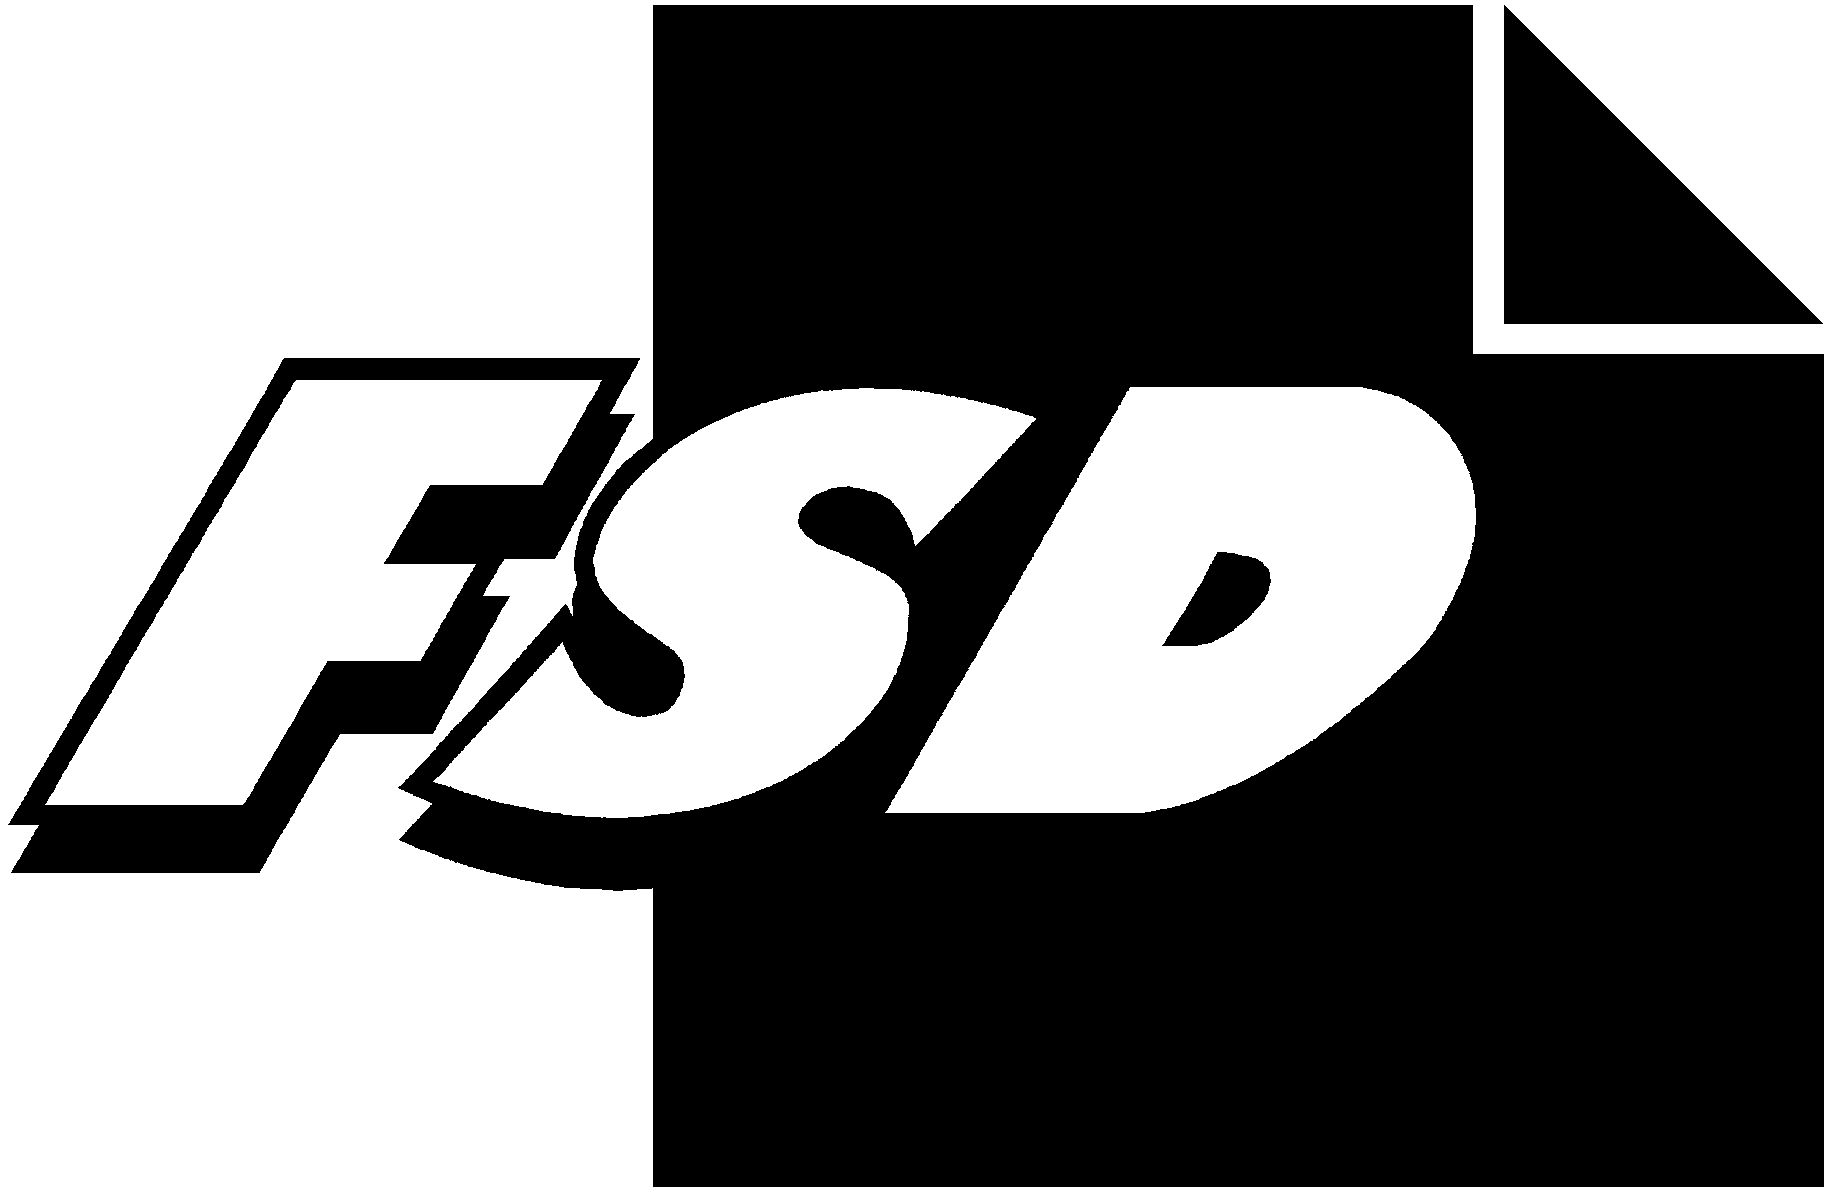 FSD2553 Lasten oikeudet 2009